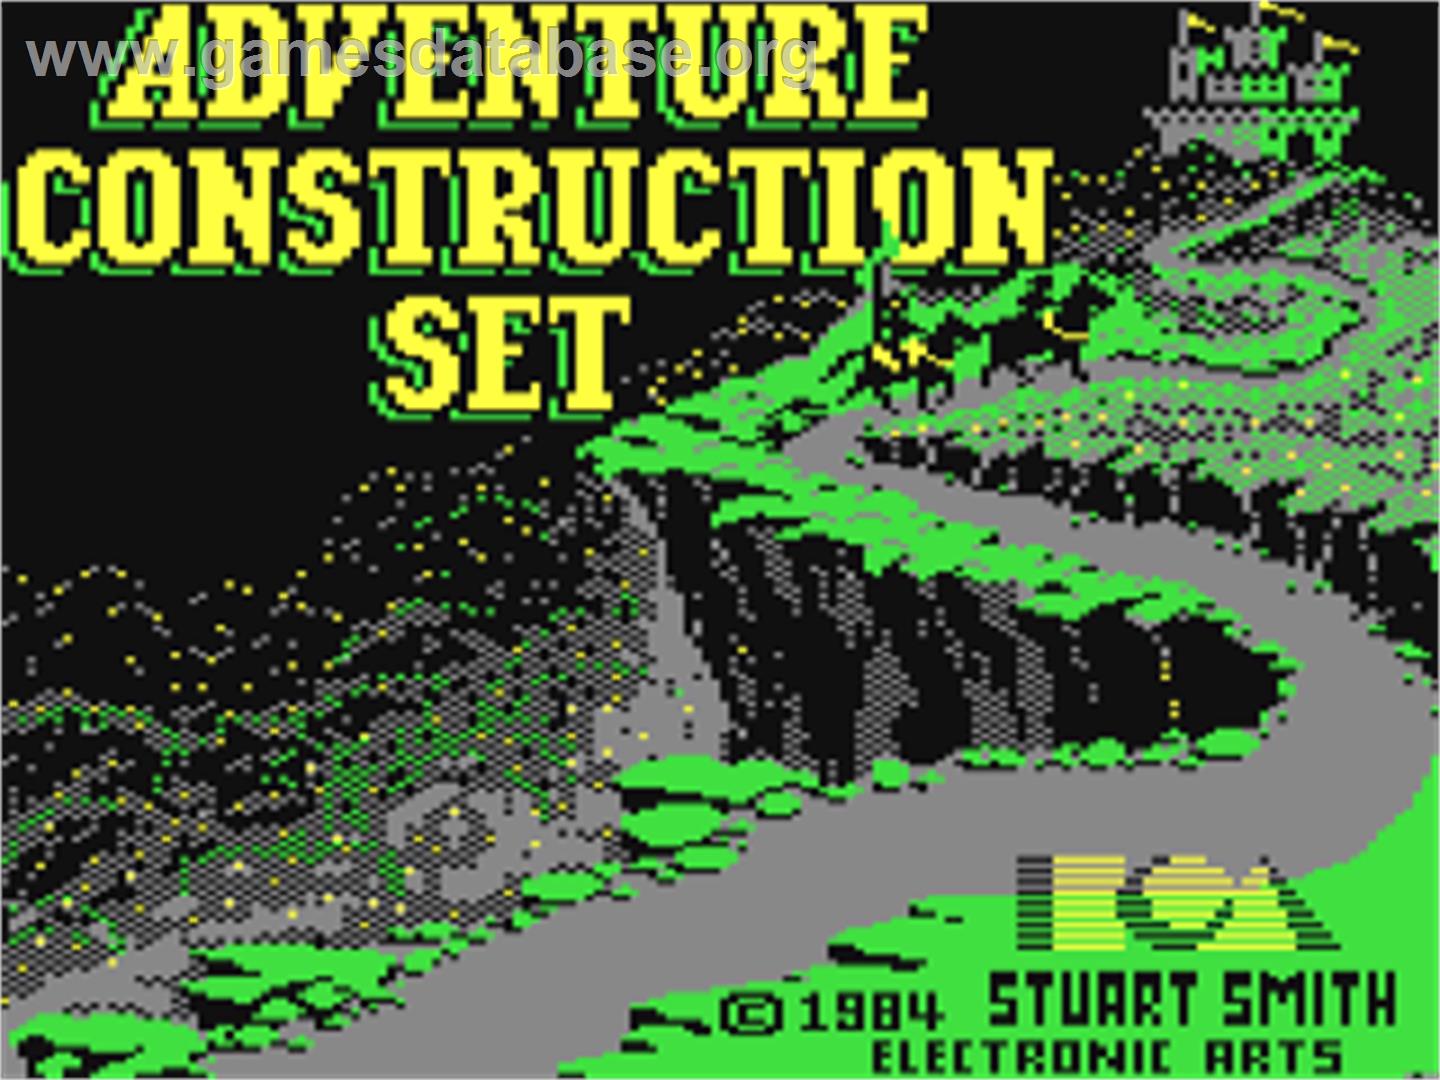 Adventure Construction Set - Commodore 64 - Artwork - Title Screen